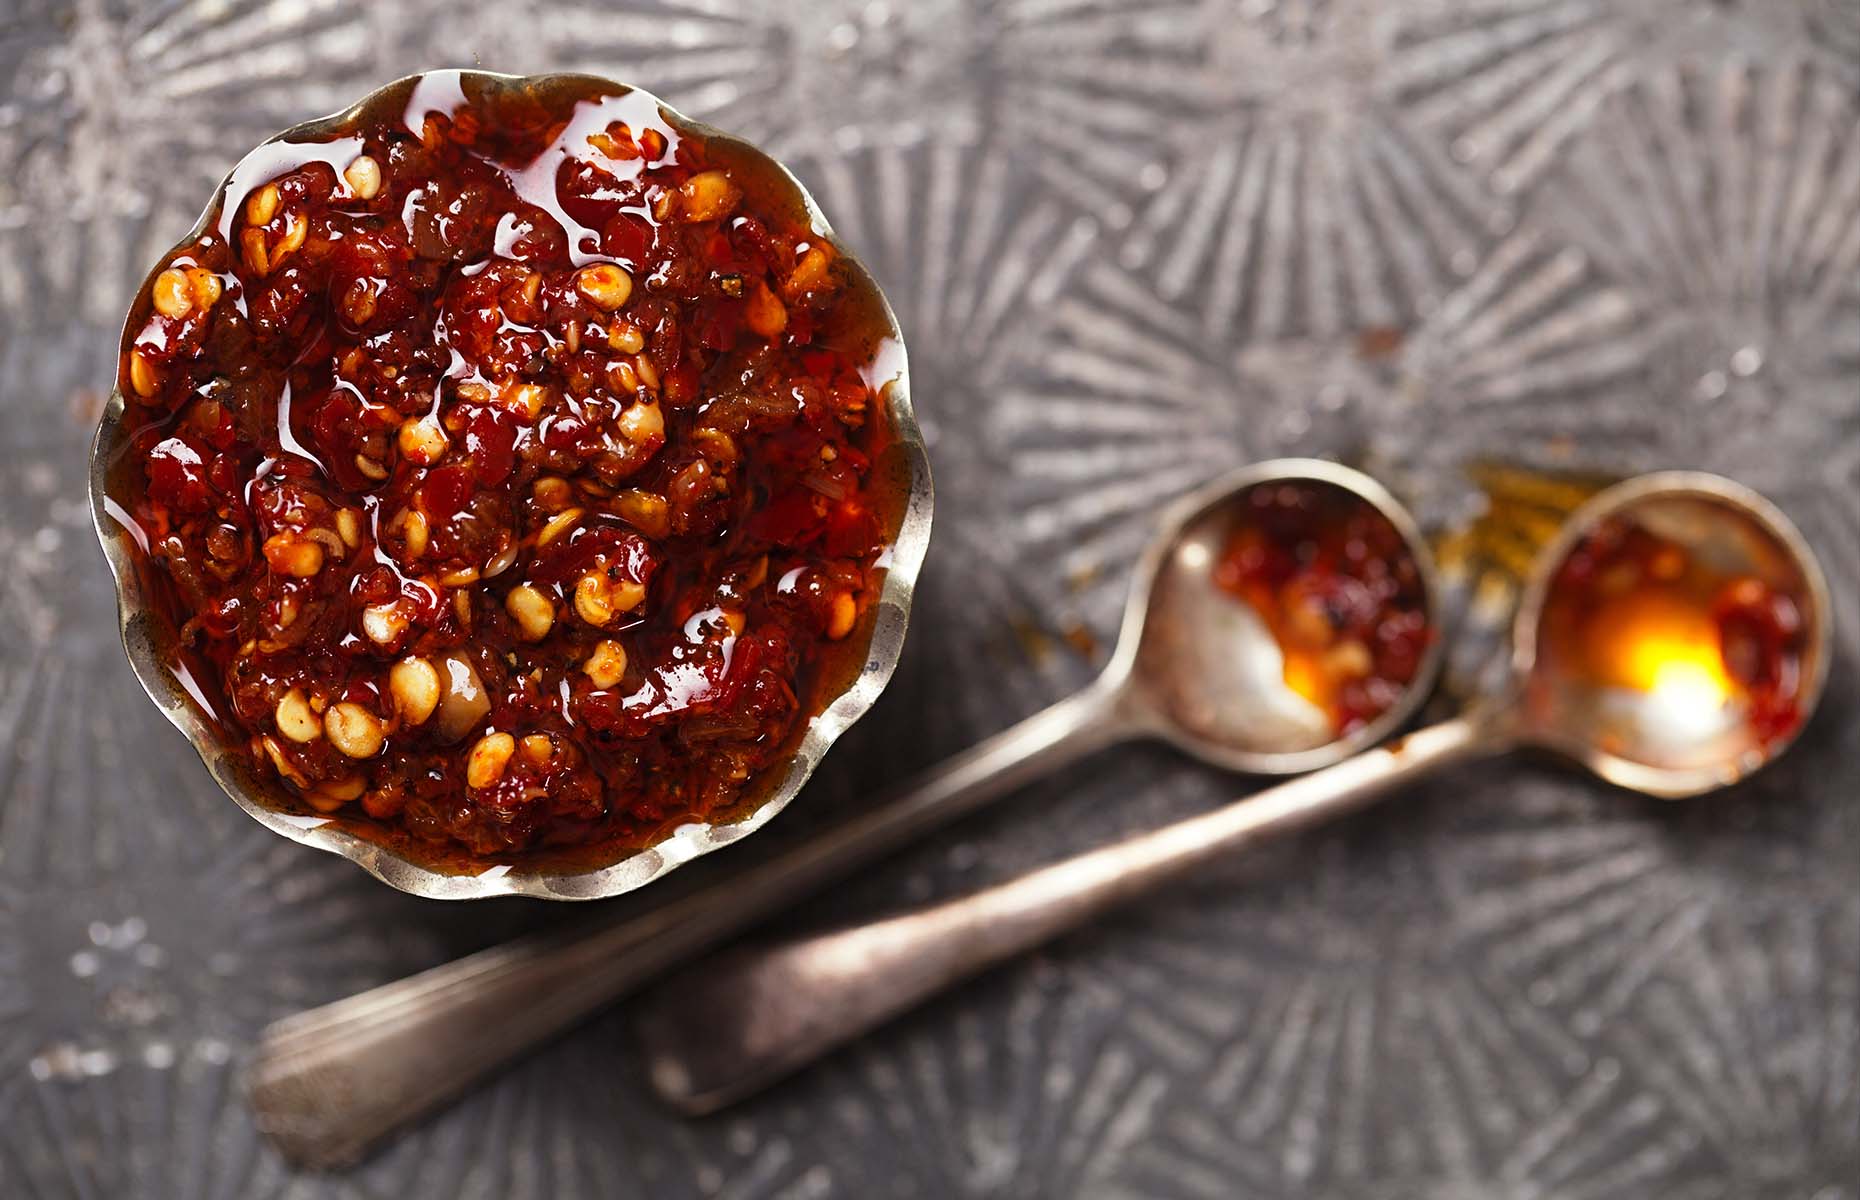 Asian chilli oil in a dipping bowl (Image: elena moiseeva/Shutterstock)